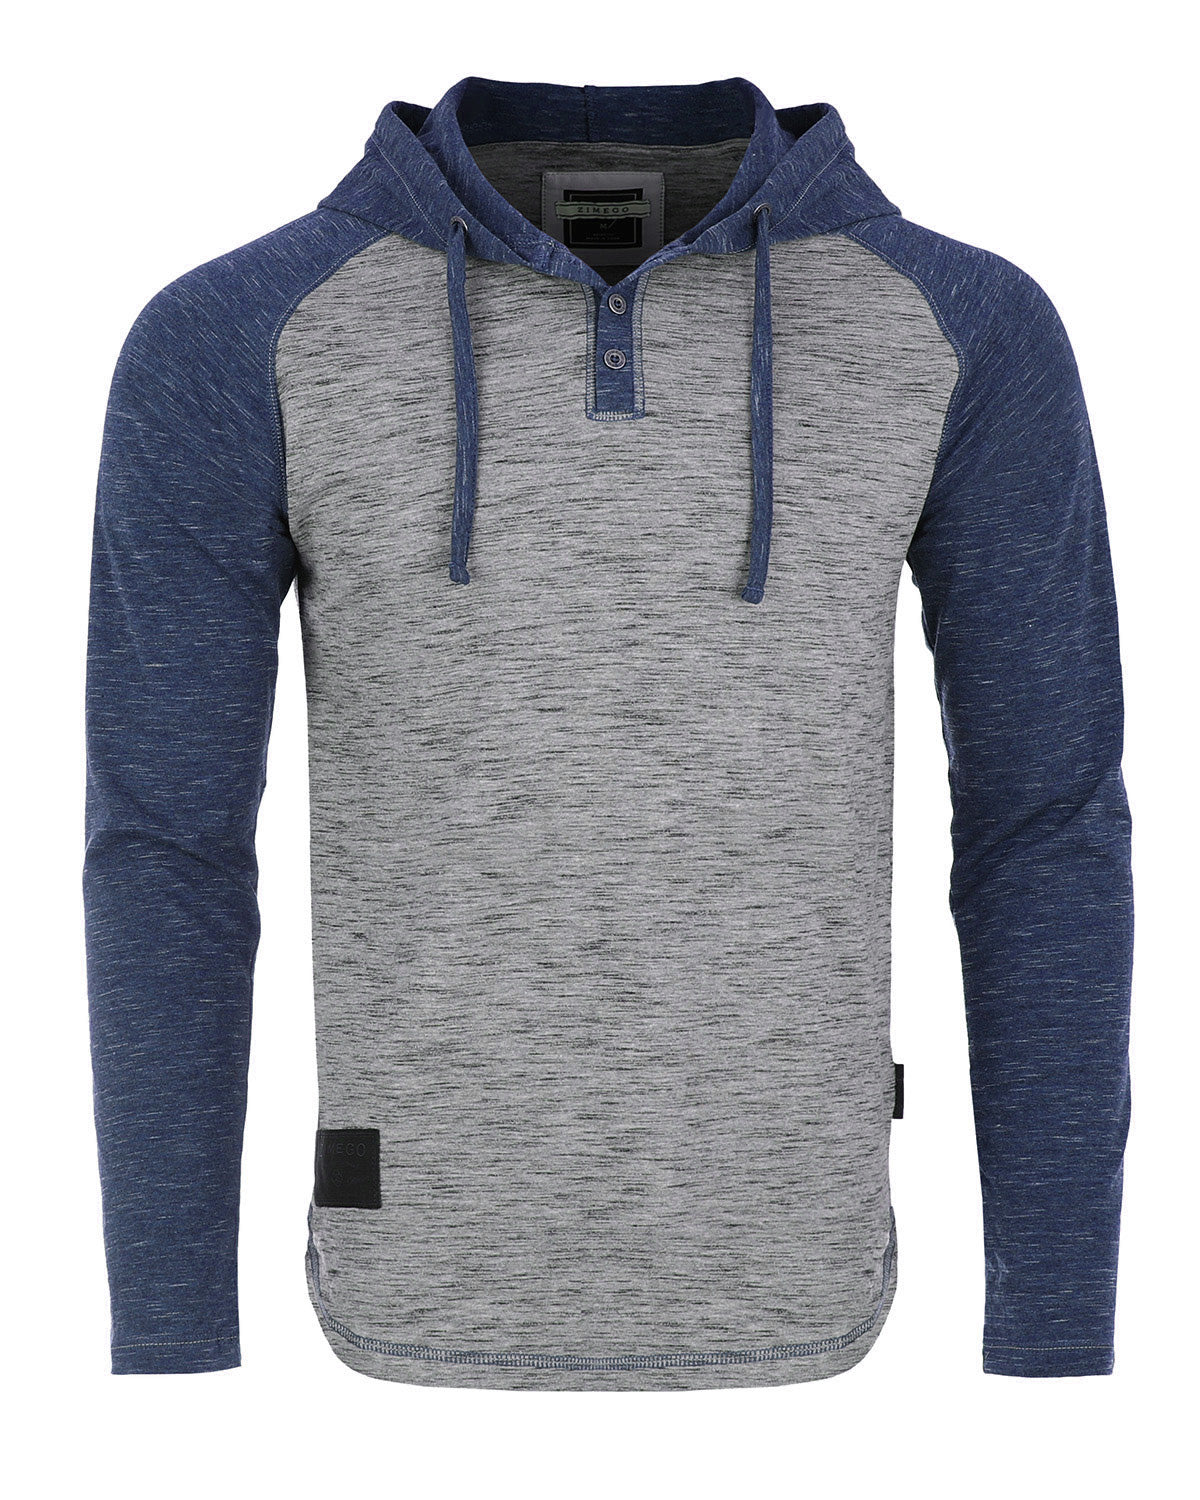 Men's Hoodie Pullover Sweatshirt – Long Sleeve Athletic Casual Active Hip Hop Button Raglan Henley Shirt Hooded Top